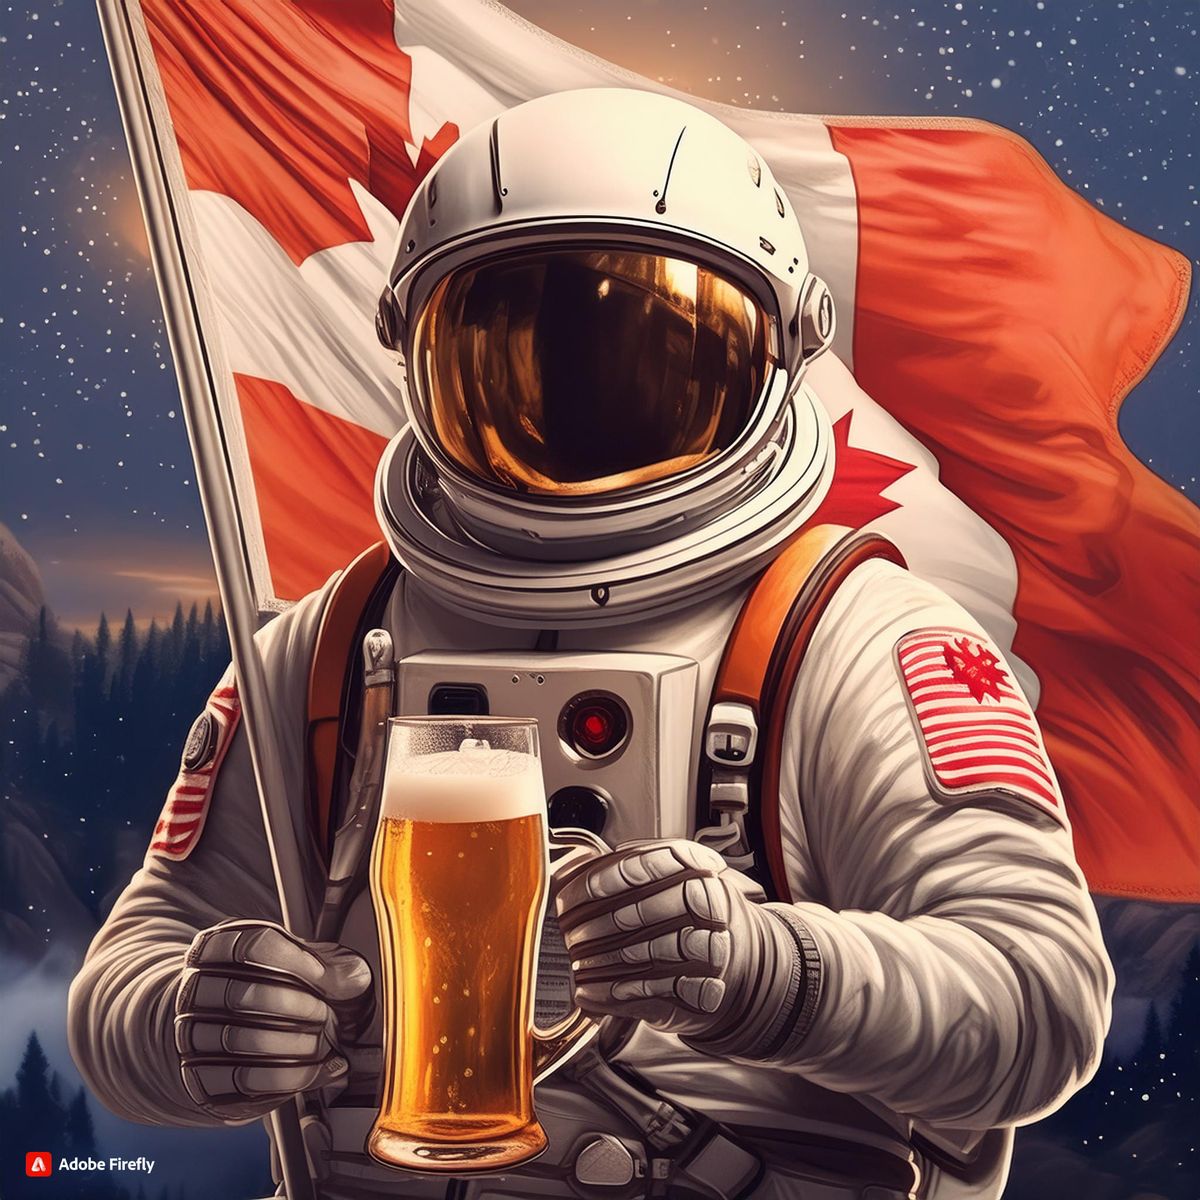 Canada Day @ Bayside Brewery